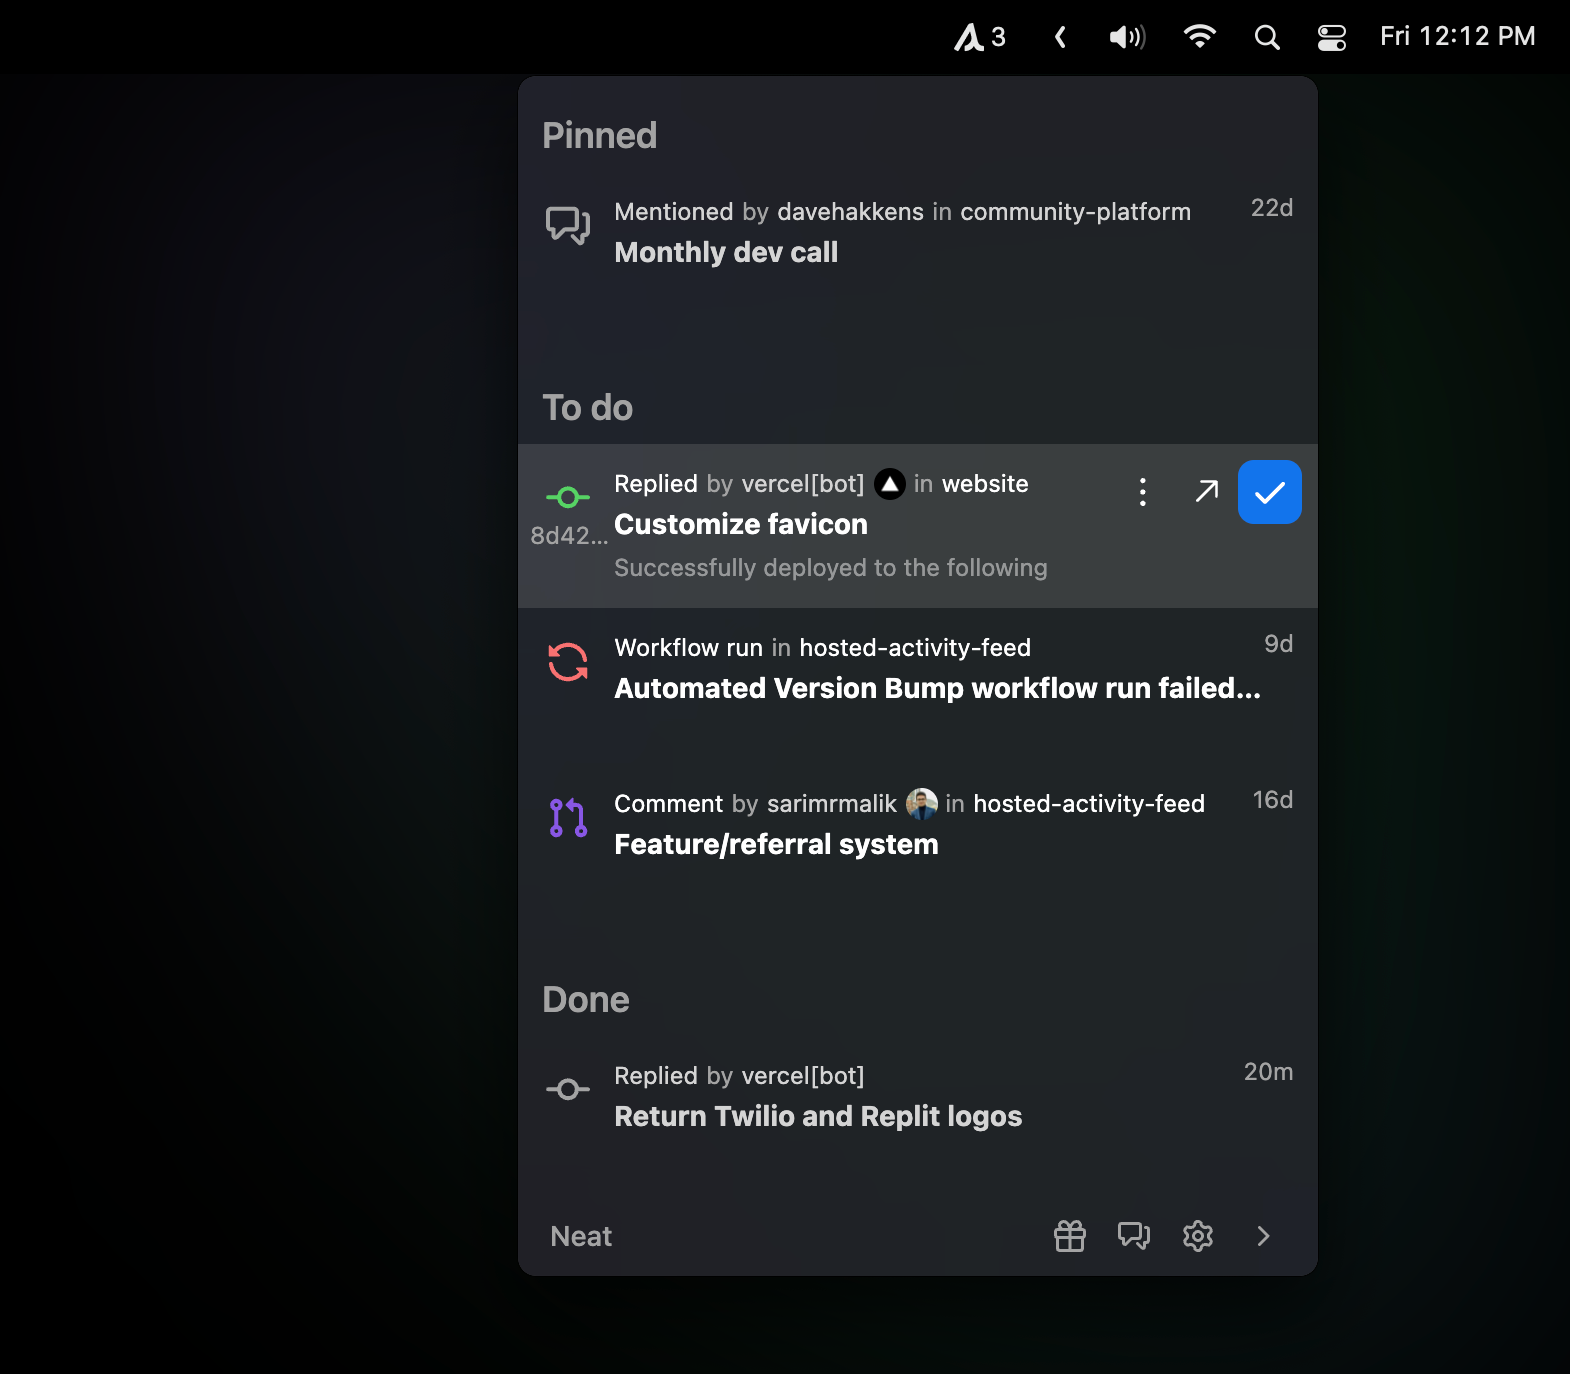 Screenshot of Neat menu bar notifier app